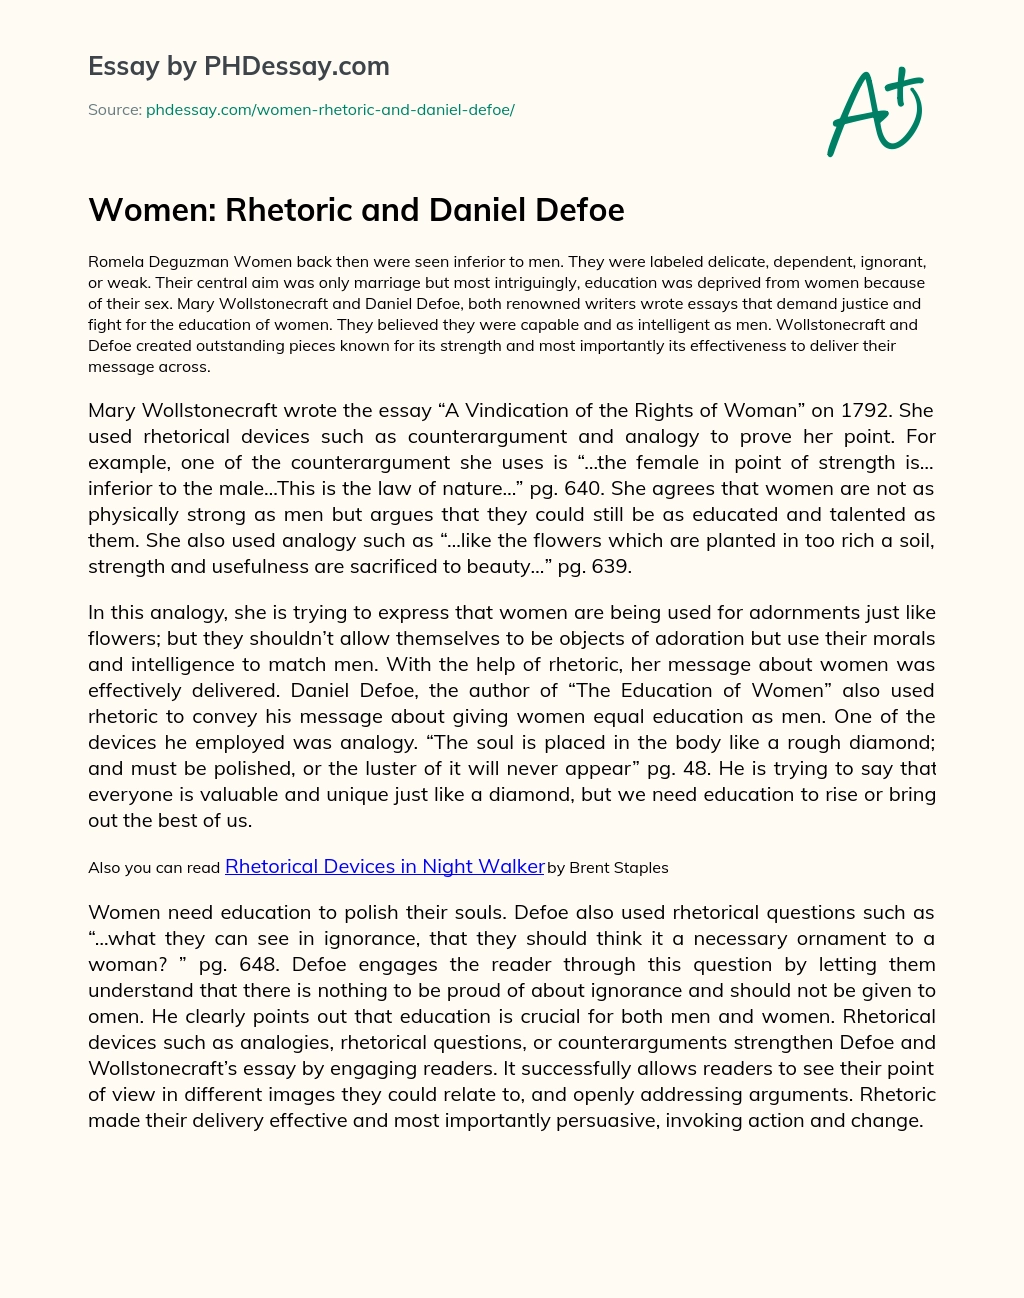 Women: Rhetoric and Daniel Defoe essay